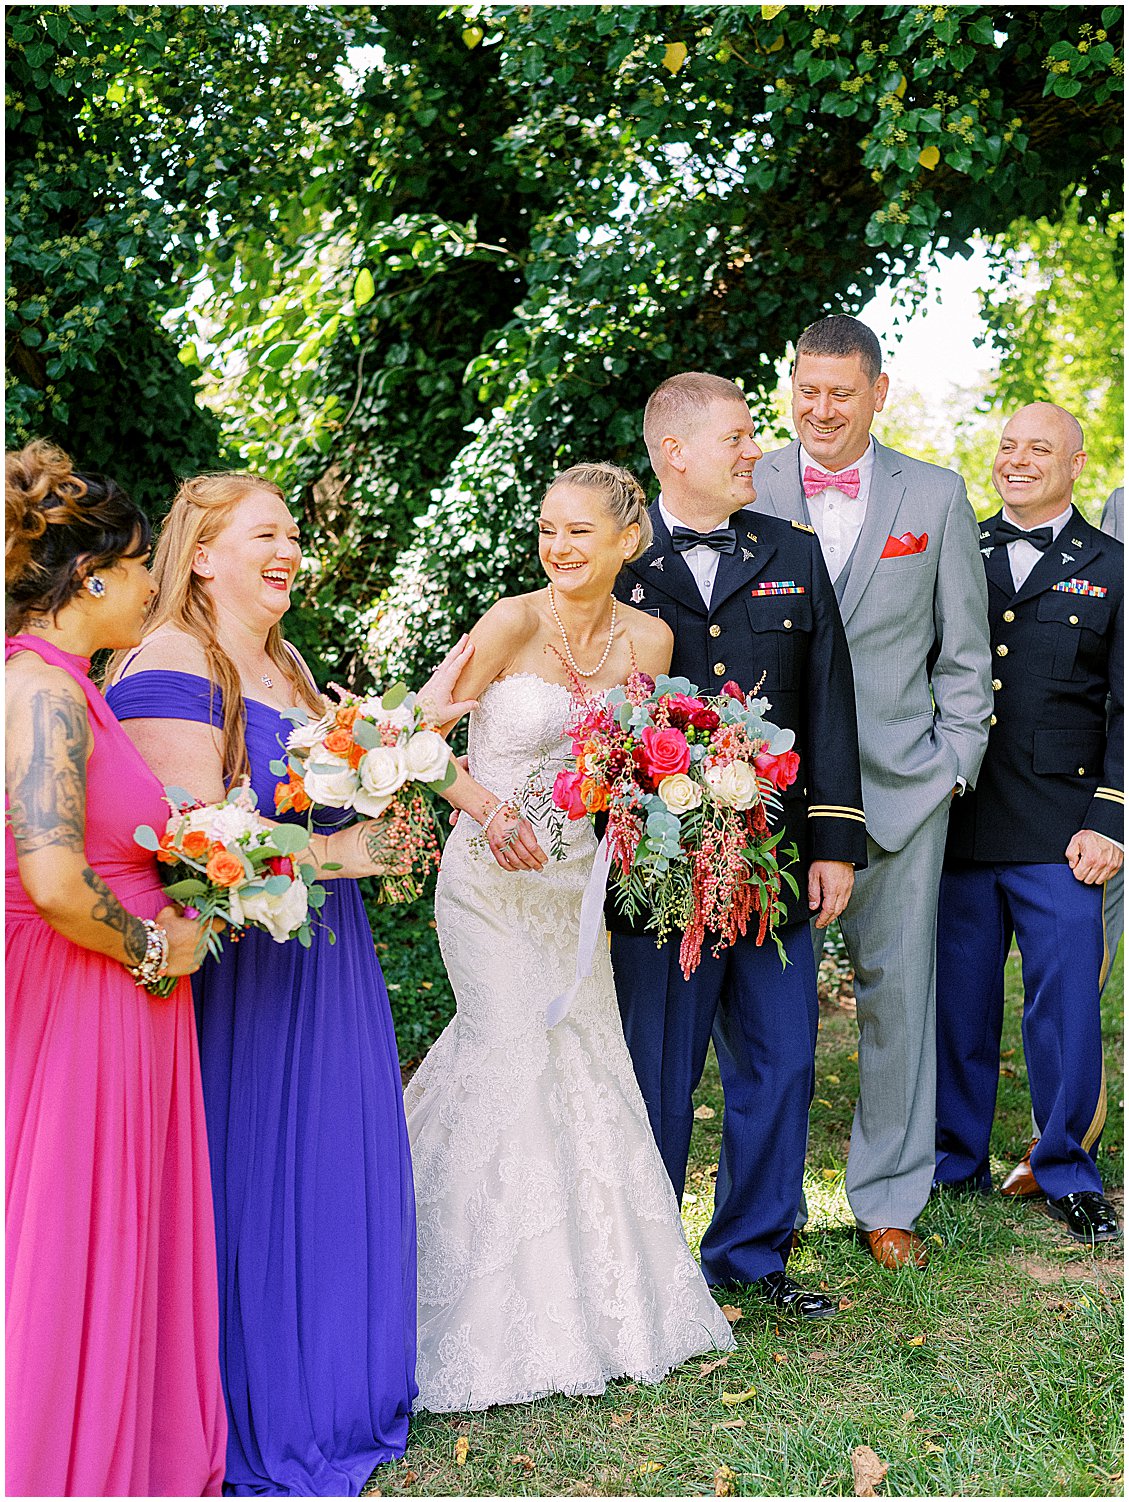 Vibrant Antrim 1844 Garden Wedding in Taneytown, Maryland with Maryland + Destination Film Wedding Photographer, Renee Hollingshead